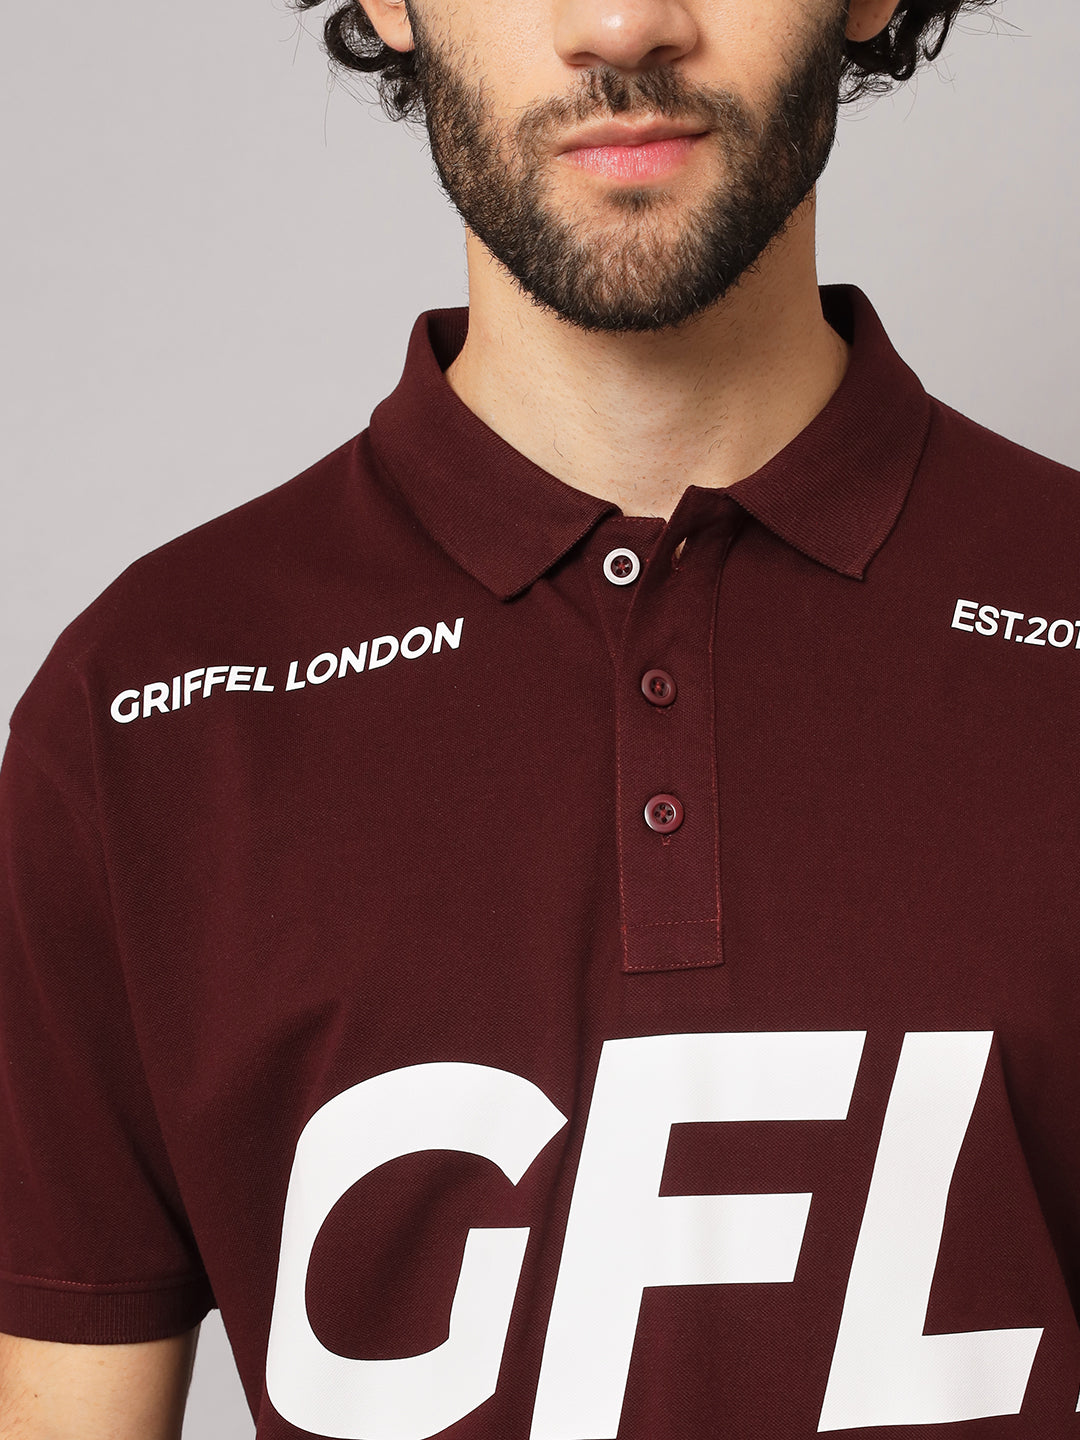 GRIFFEL Men's Maroon Cotton Polo T-shirt - griffel